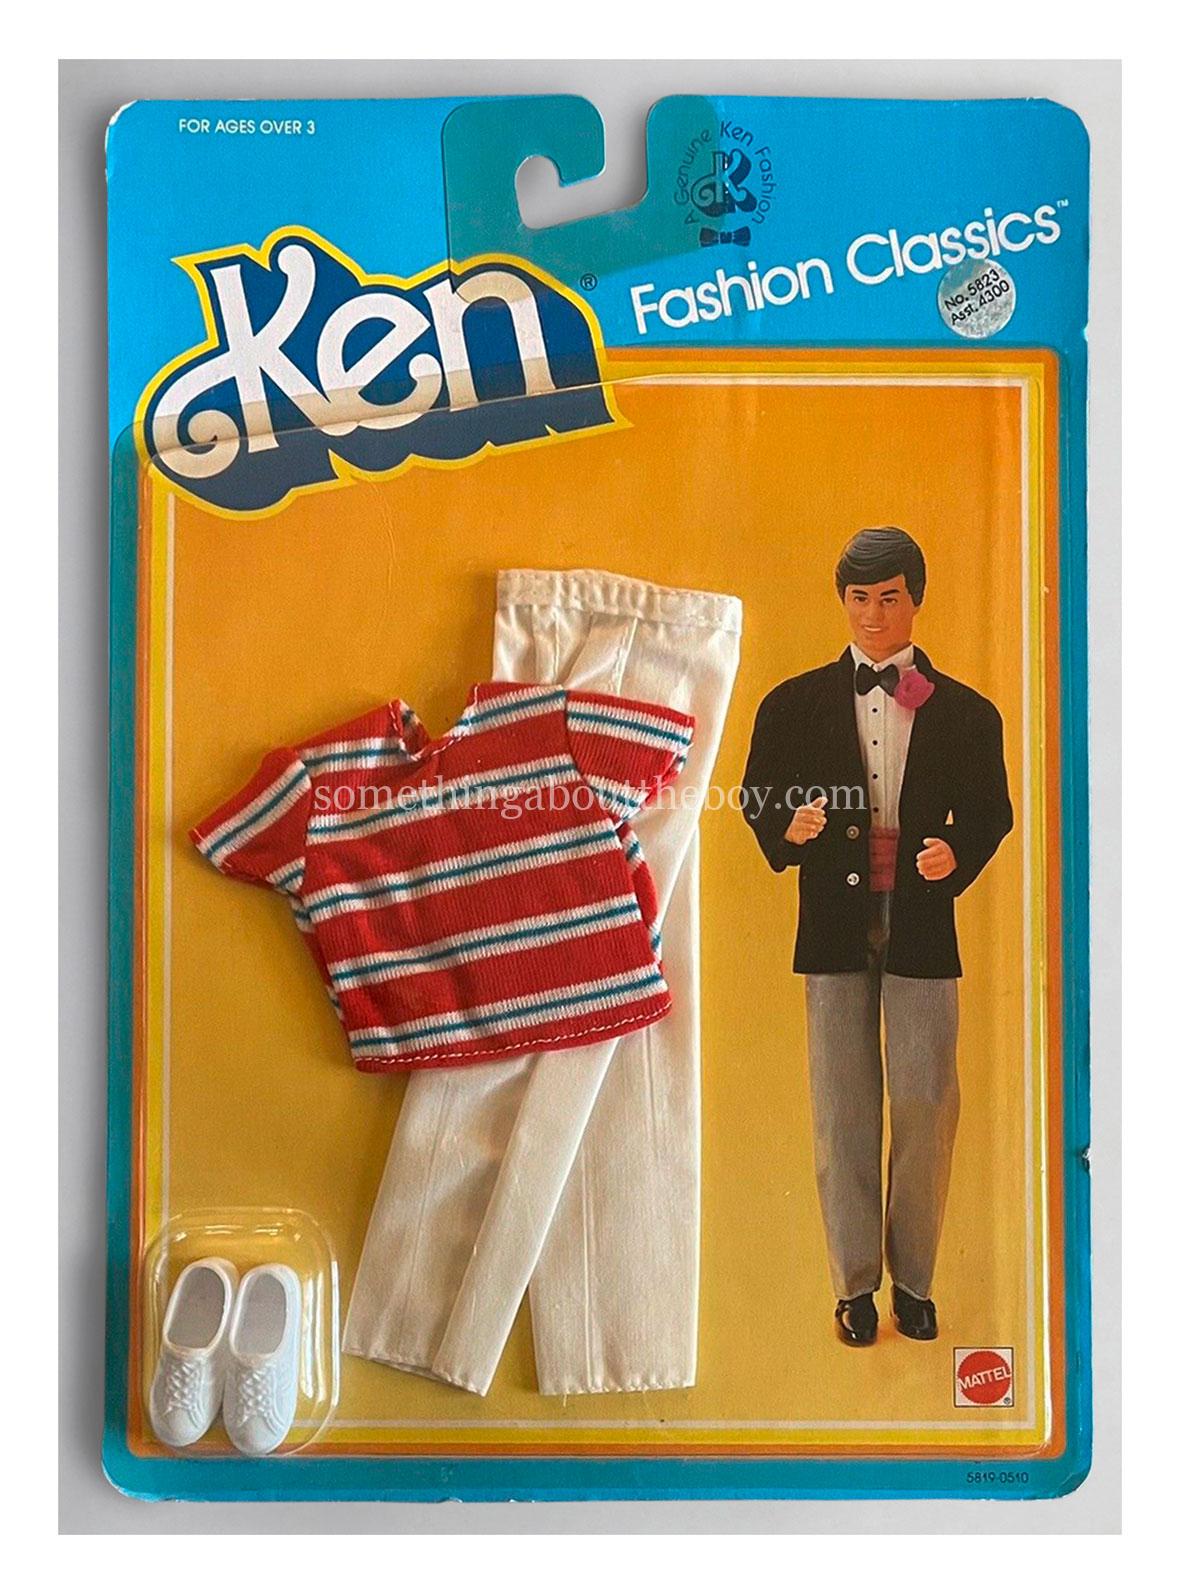 1983-84 Kmart Fashion Classics #5823 in original packaging